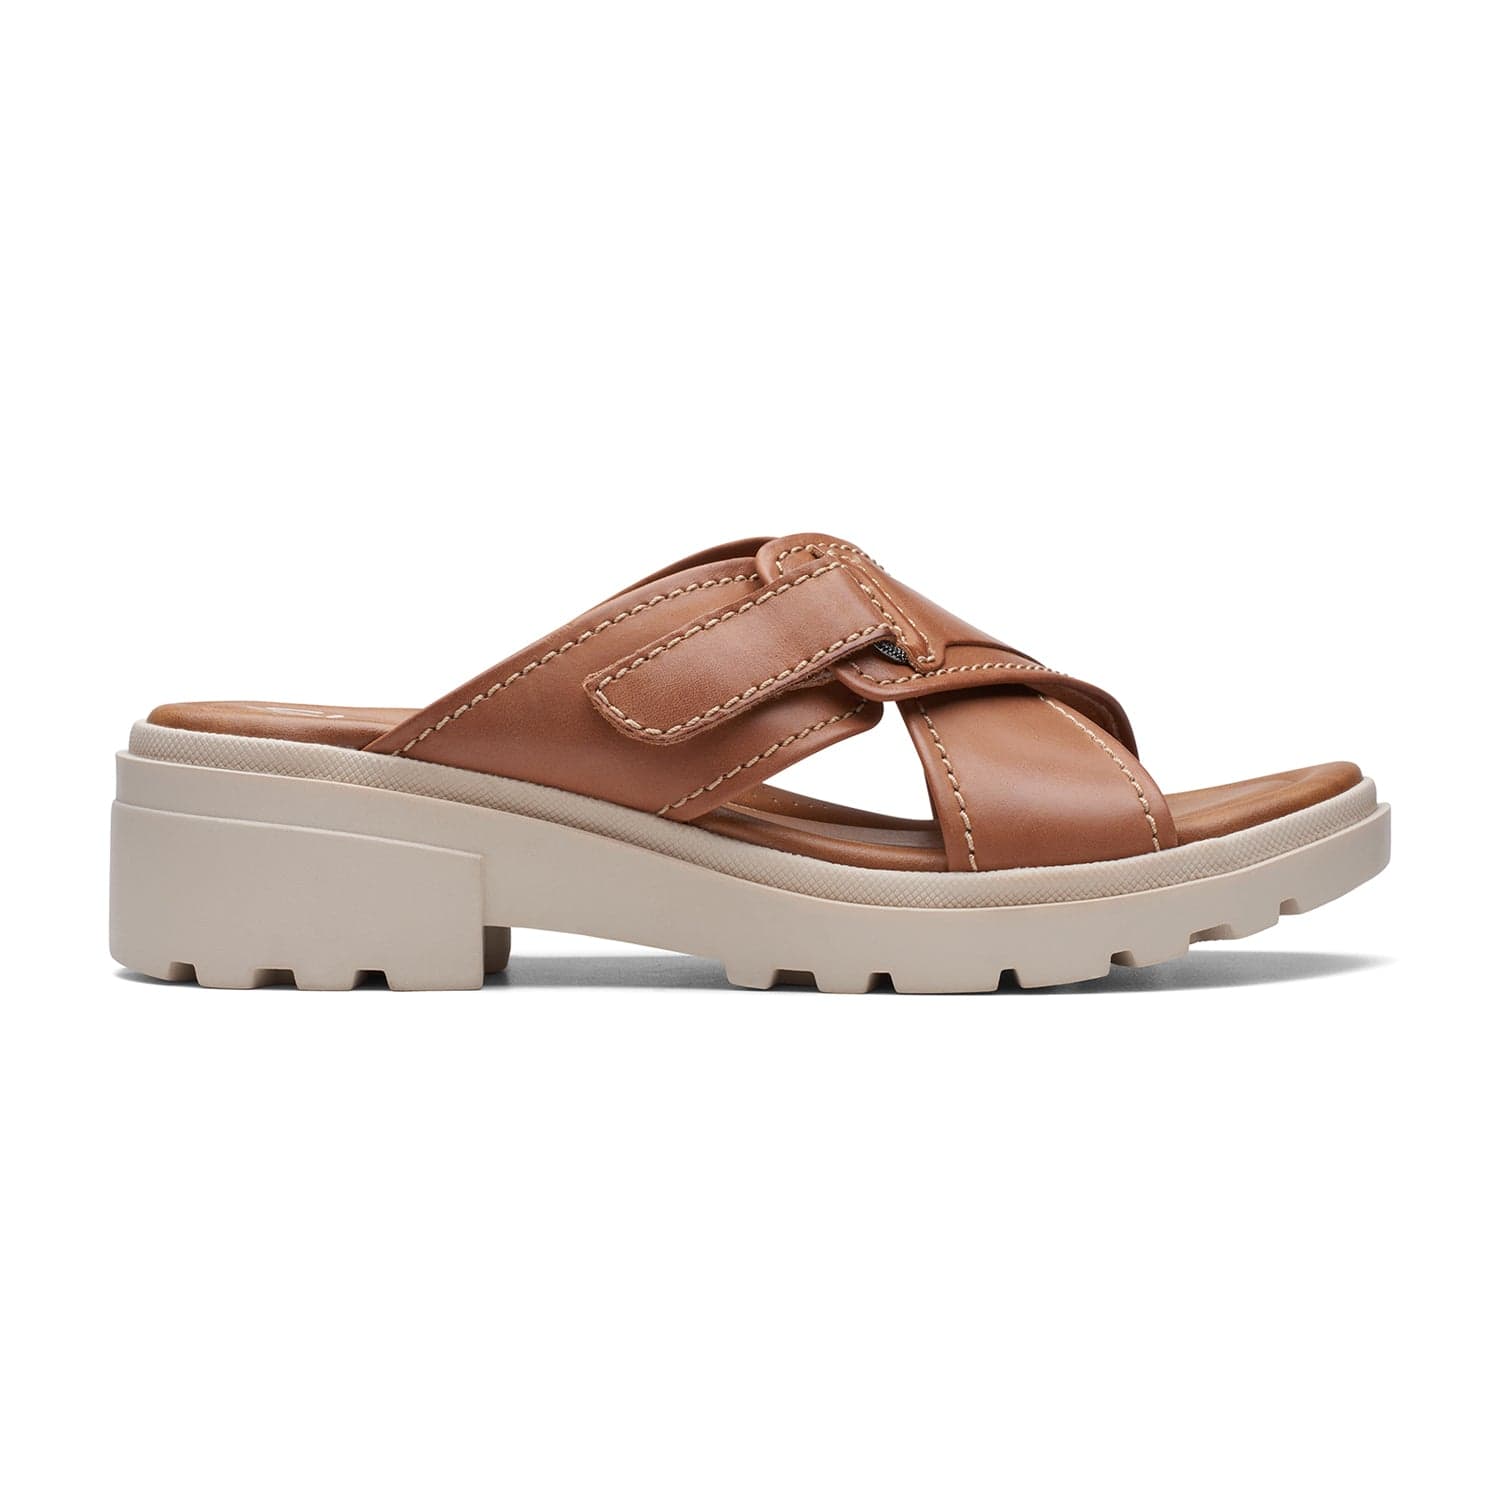 Clarks Coast Cross Sandals - Tan Leather - 261719075 - E Width (Wide Fit)